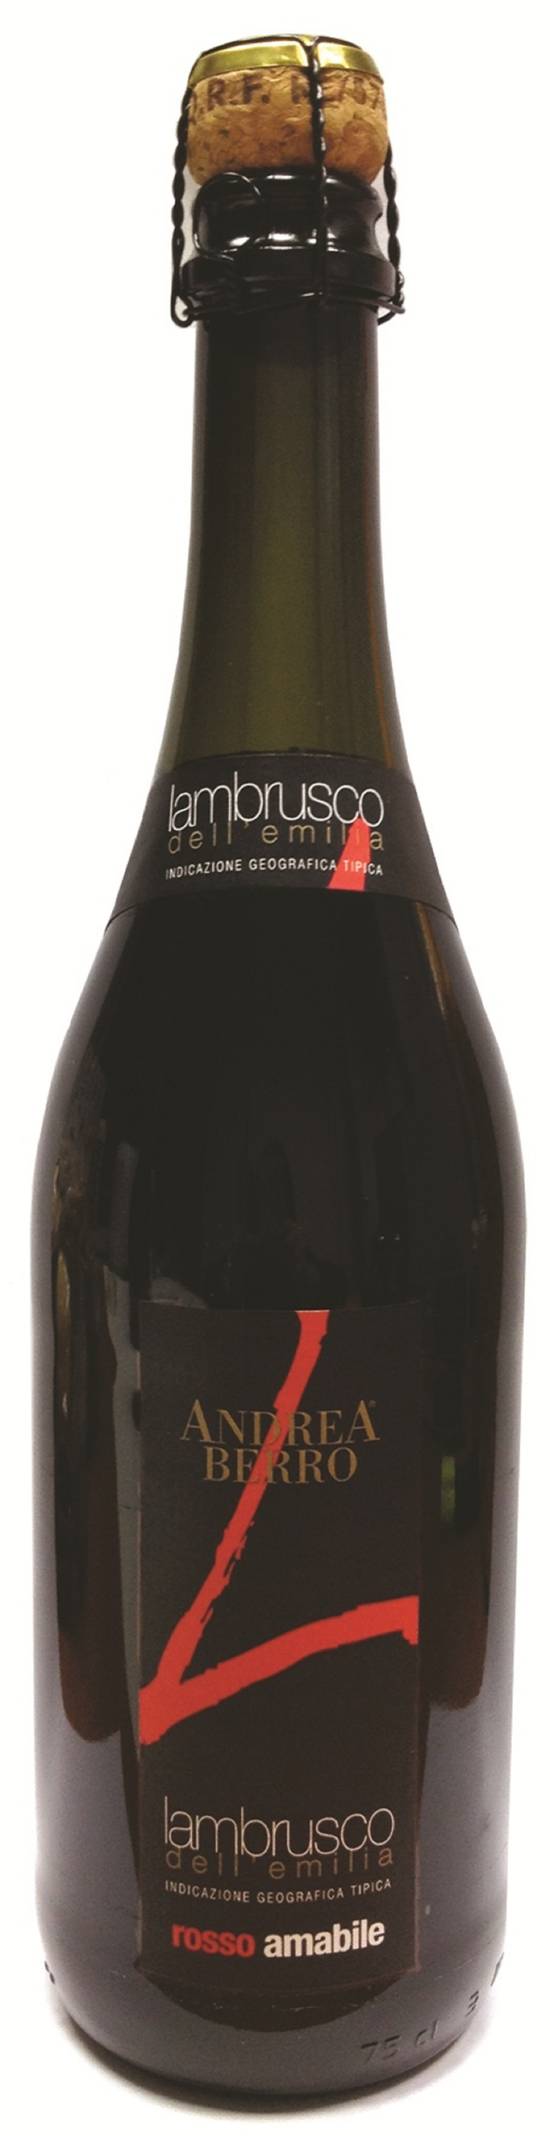 Andrea Berro - Vin rouge lambrusco rosso amabile (750 ml)